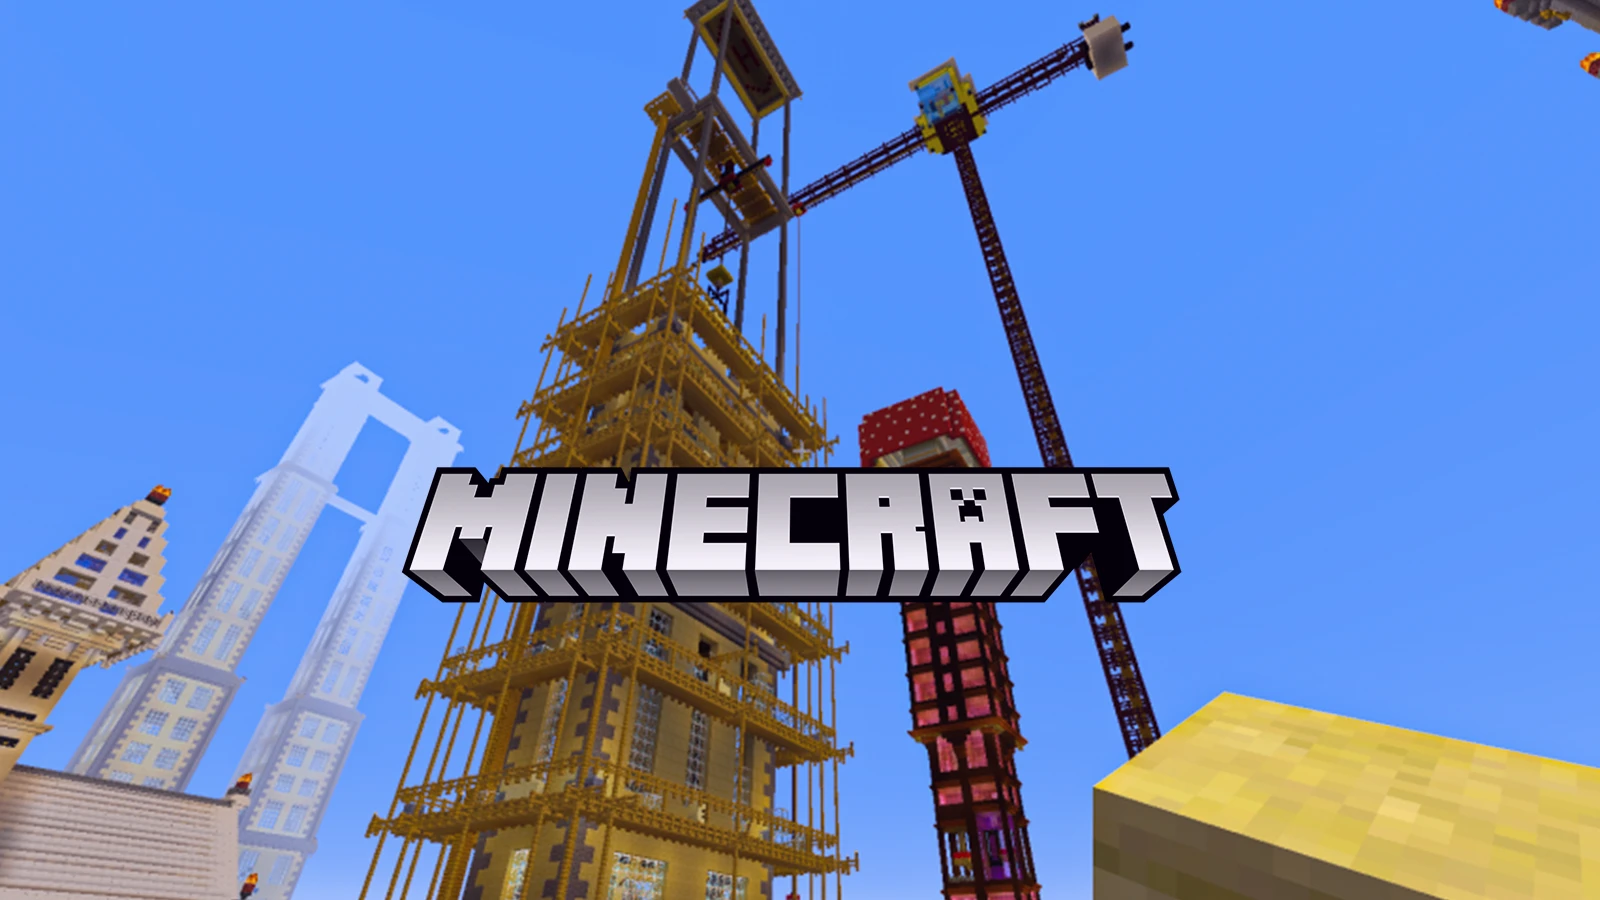 Minecraft İskele Yapımı